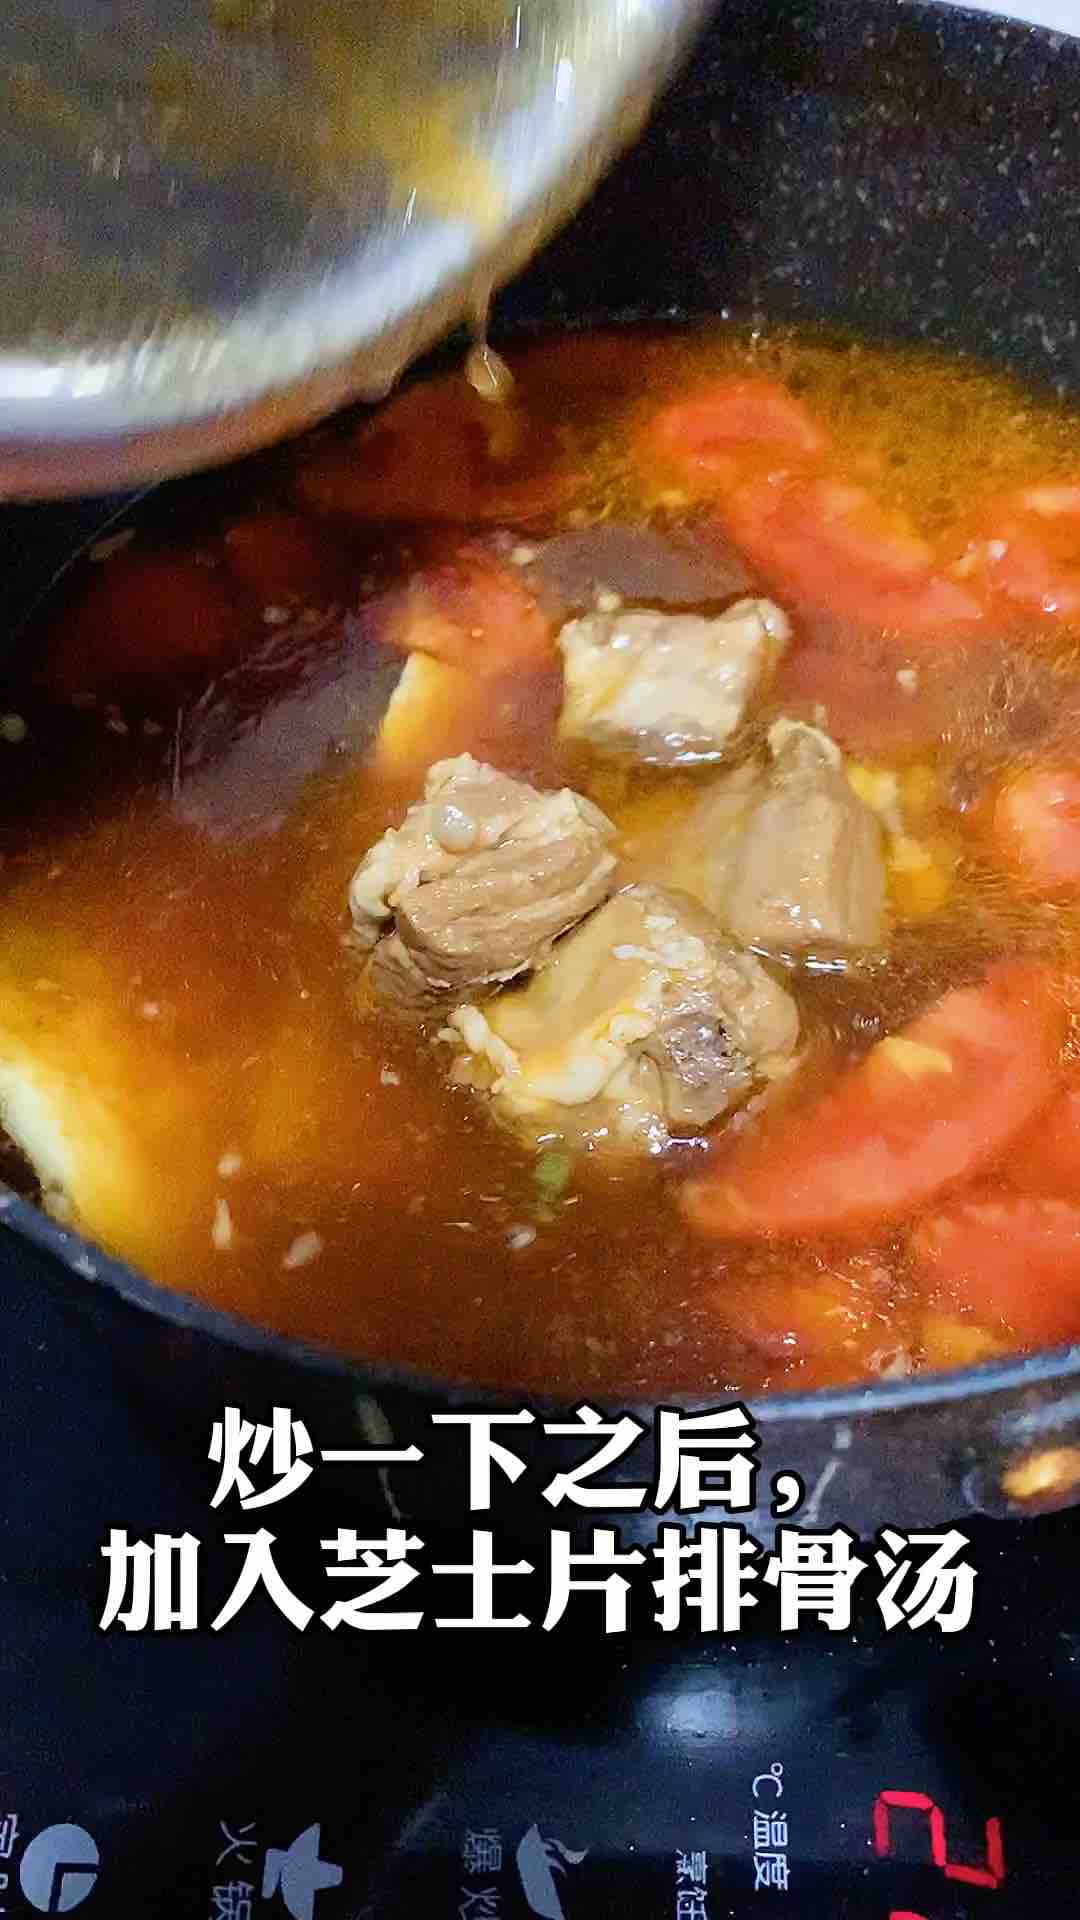 Tomato and Egg Pork Ribs Noodle Soup recipe